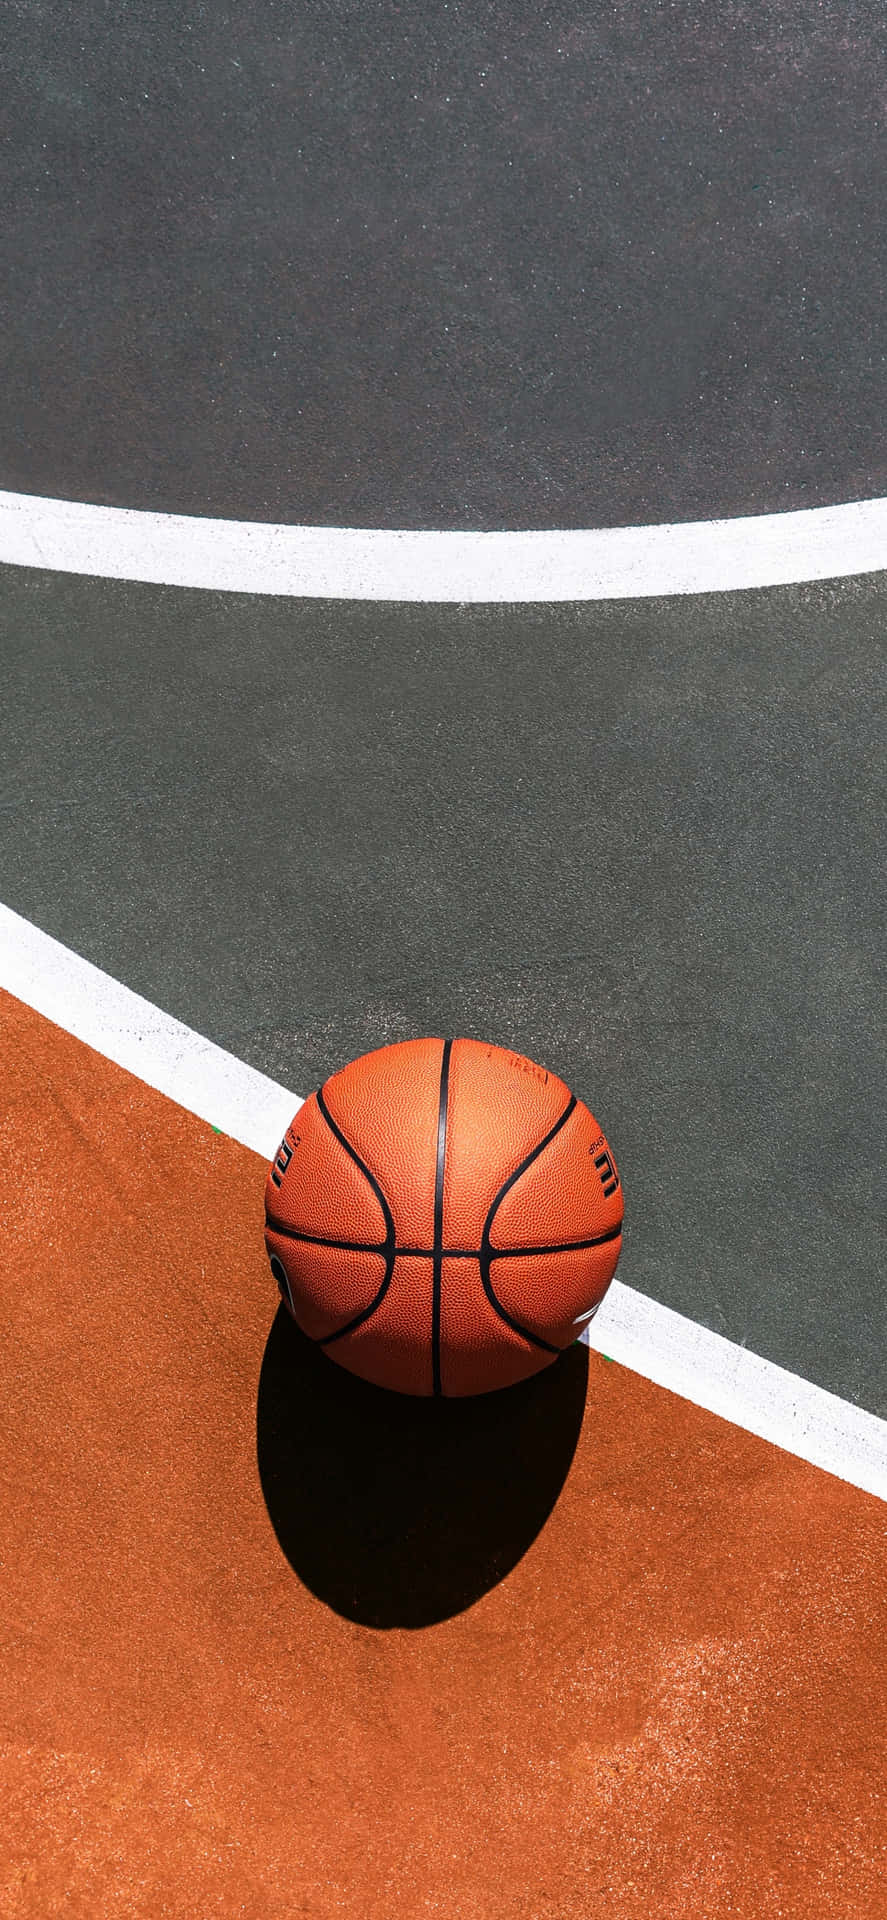 iPhone Xs Basketball NBA Draft Baggrund